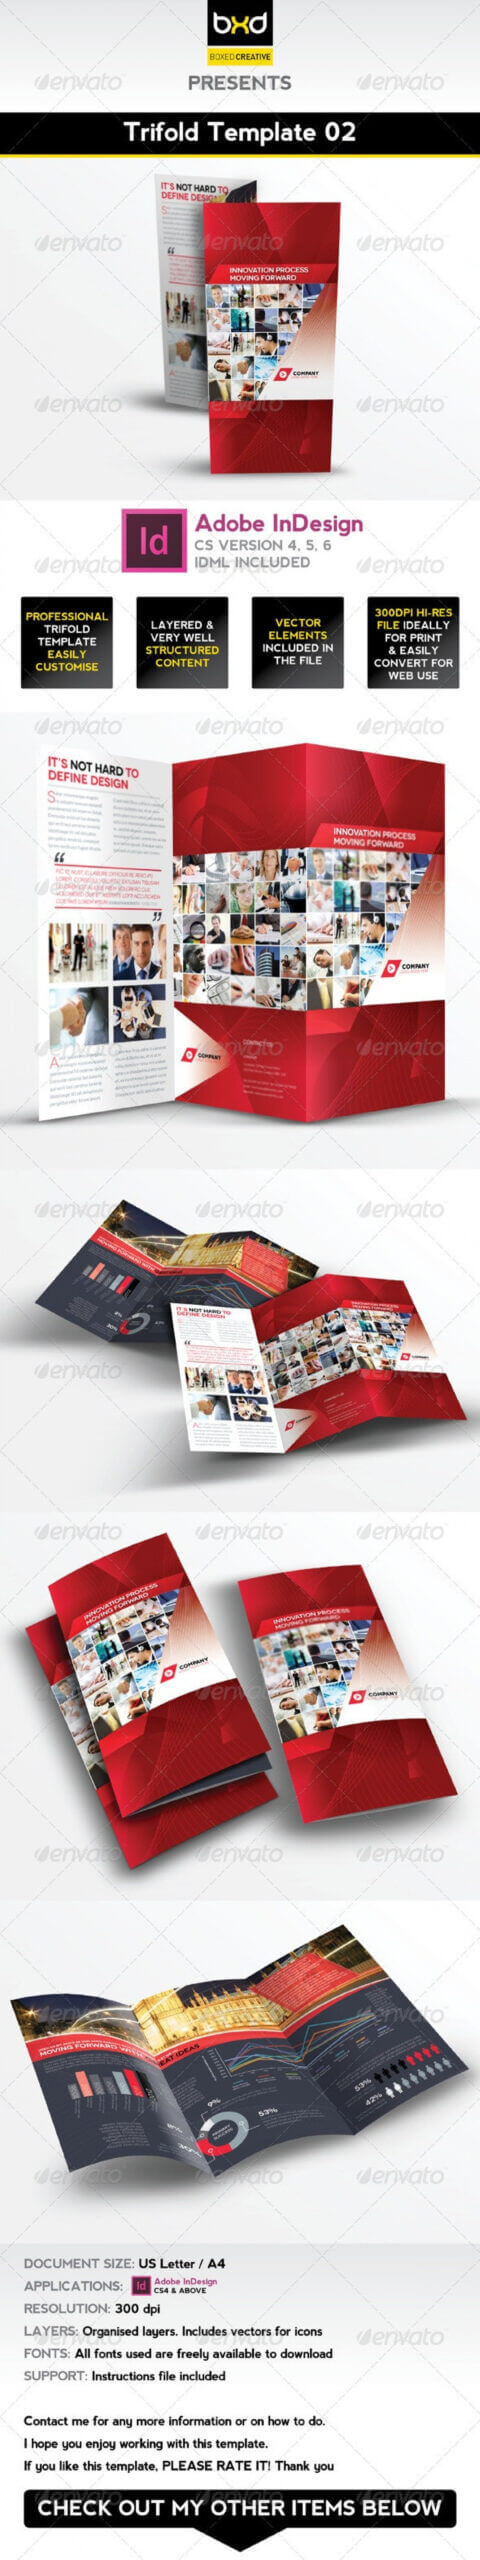 009 Adobe Indesign Tri Fold Brochure Template Ideas Trifold With Adobe Indesign Tri Fold Brochure Template